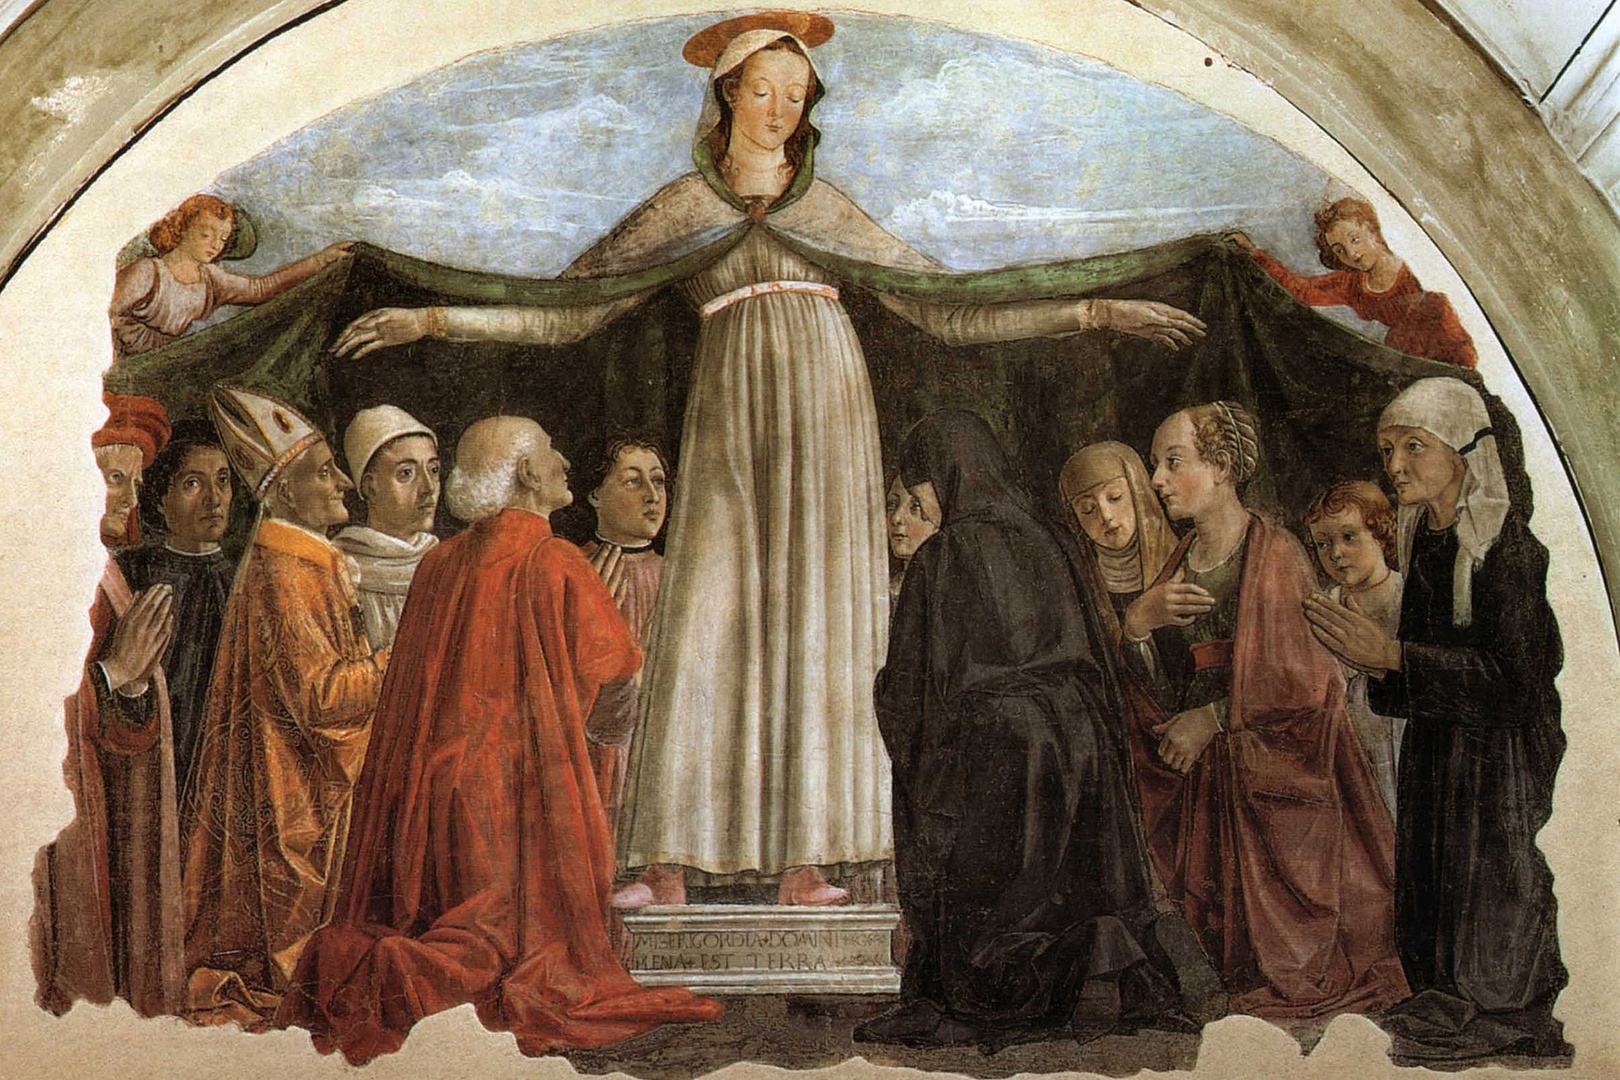 Young Amerigo Vesupucci appears under the Madonnas right arm in the Chiesa d'Ognissanti church.